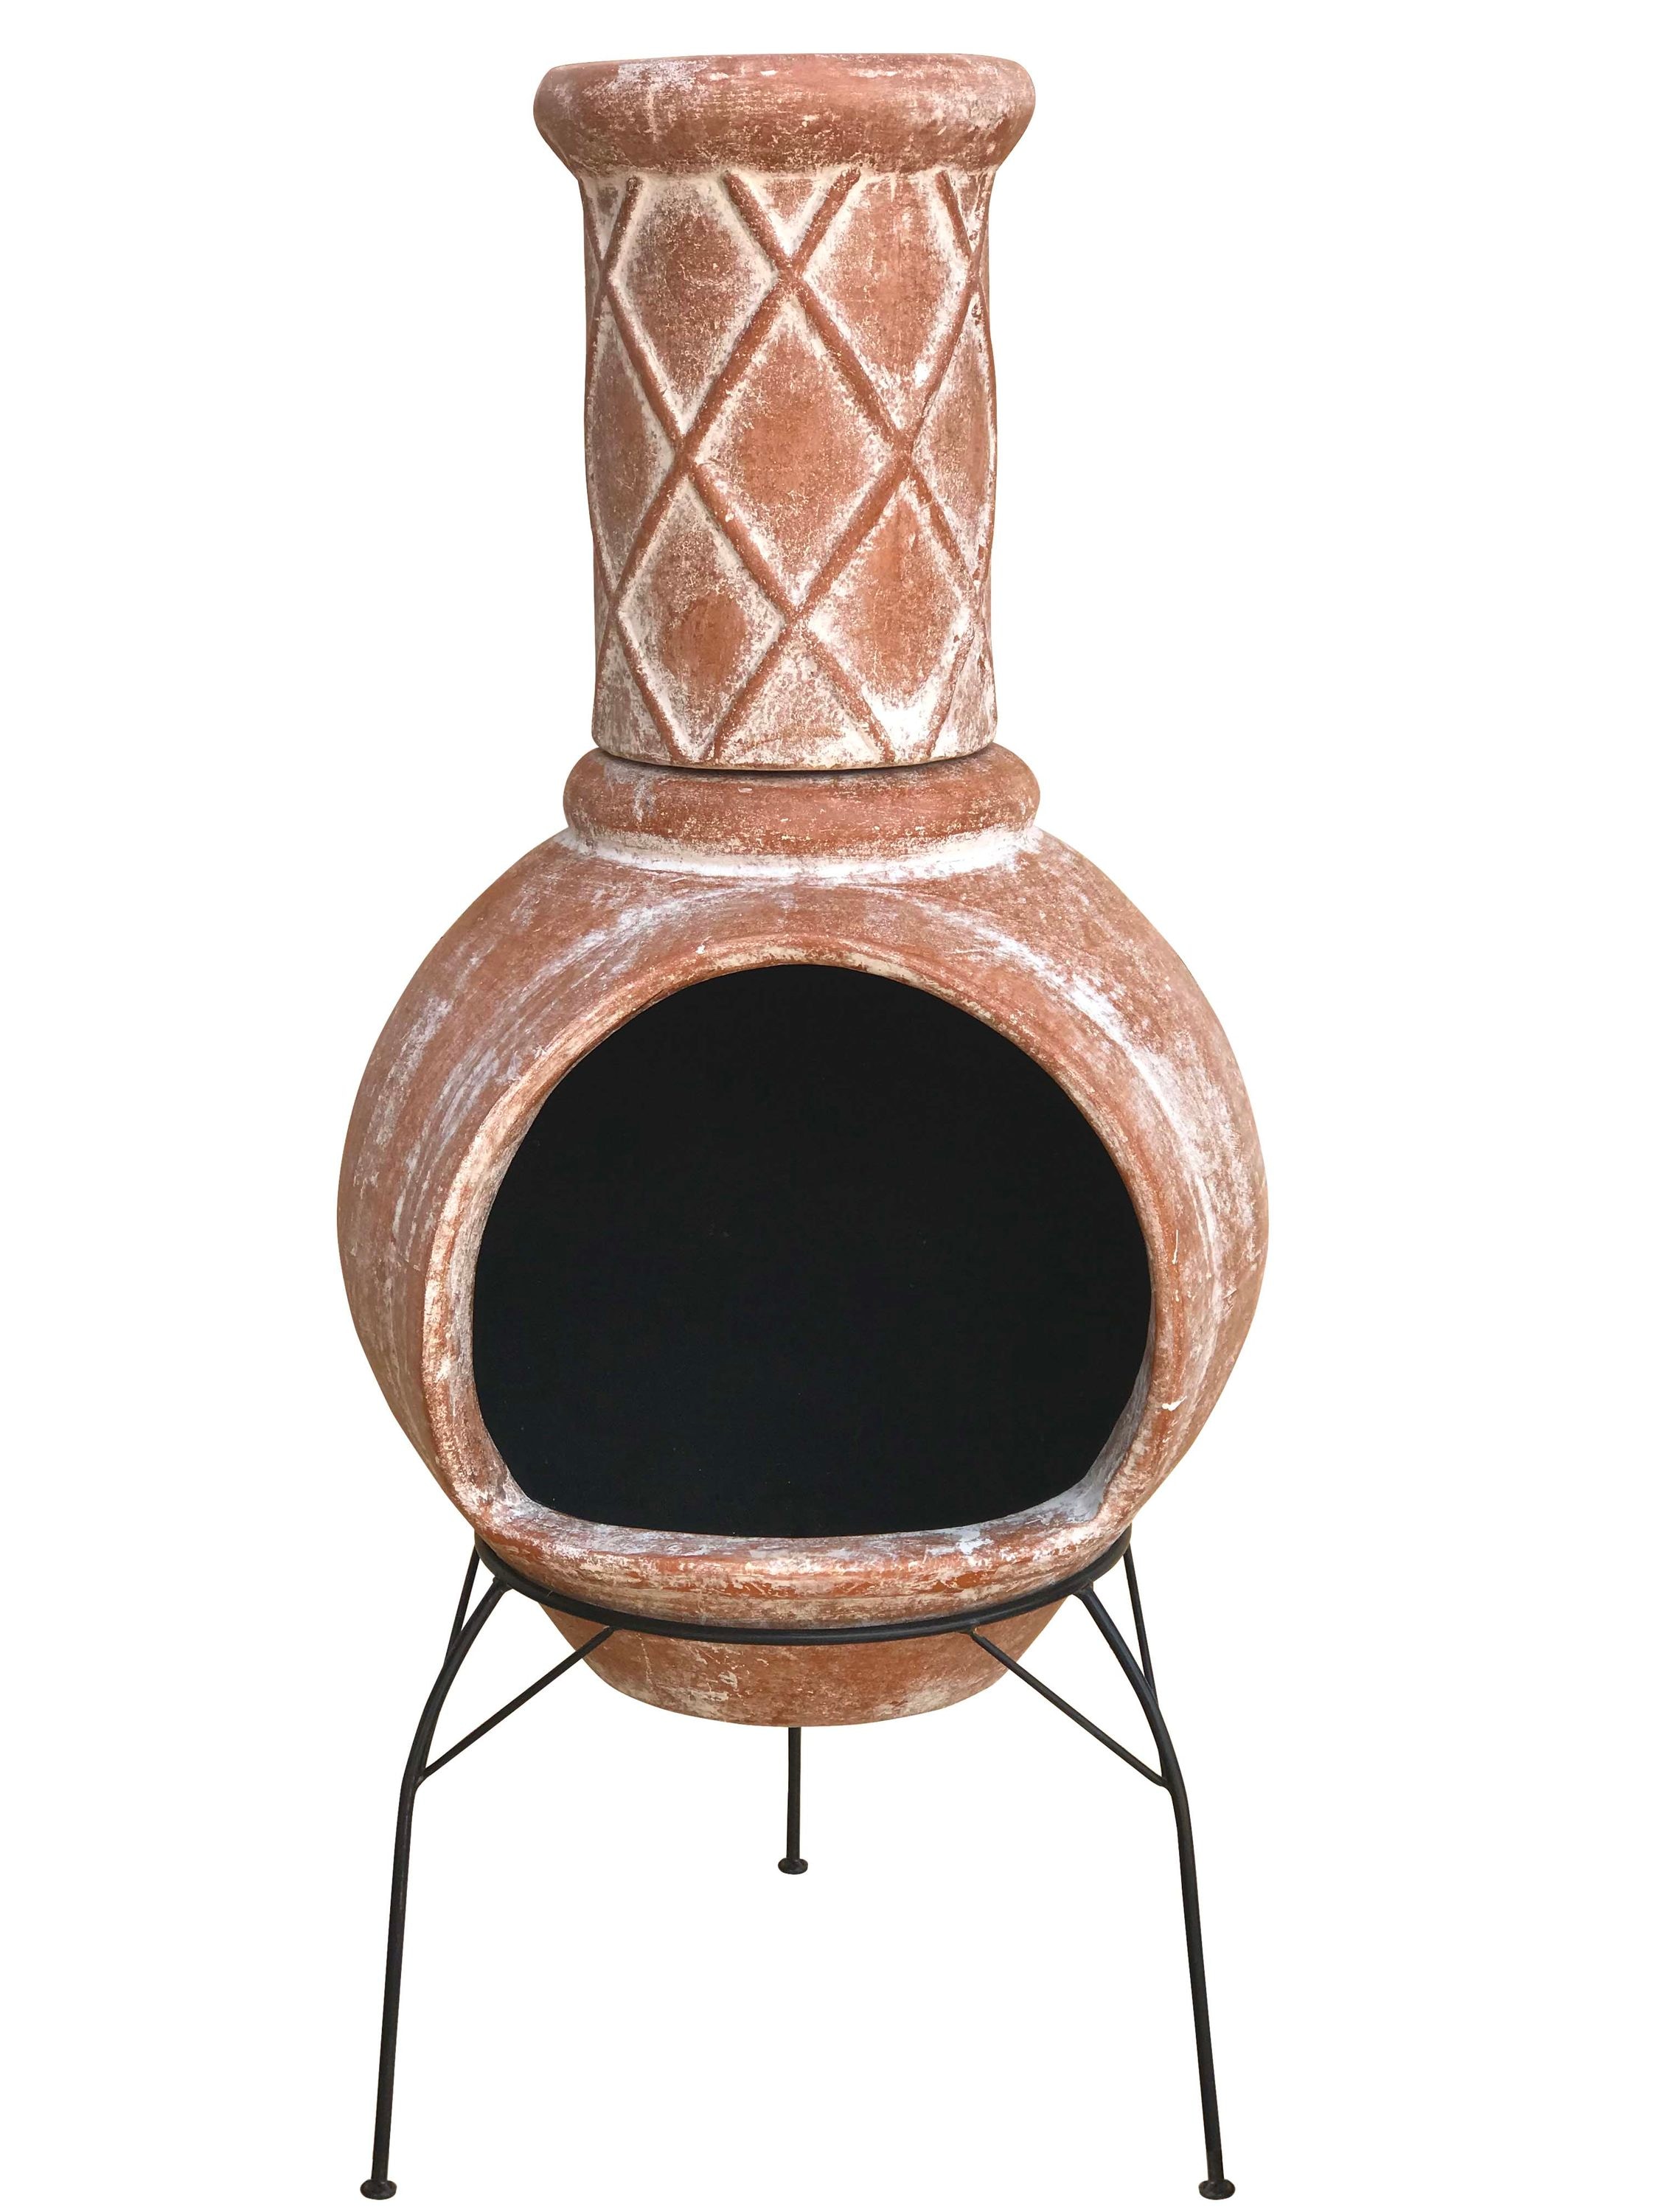 Terracotta Clay Chiminea, Ceramic Fire Pit